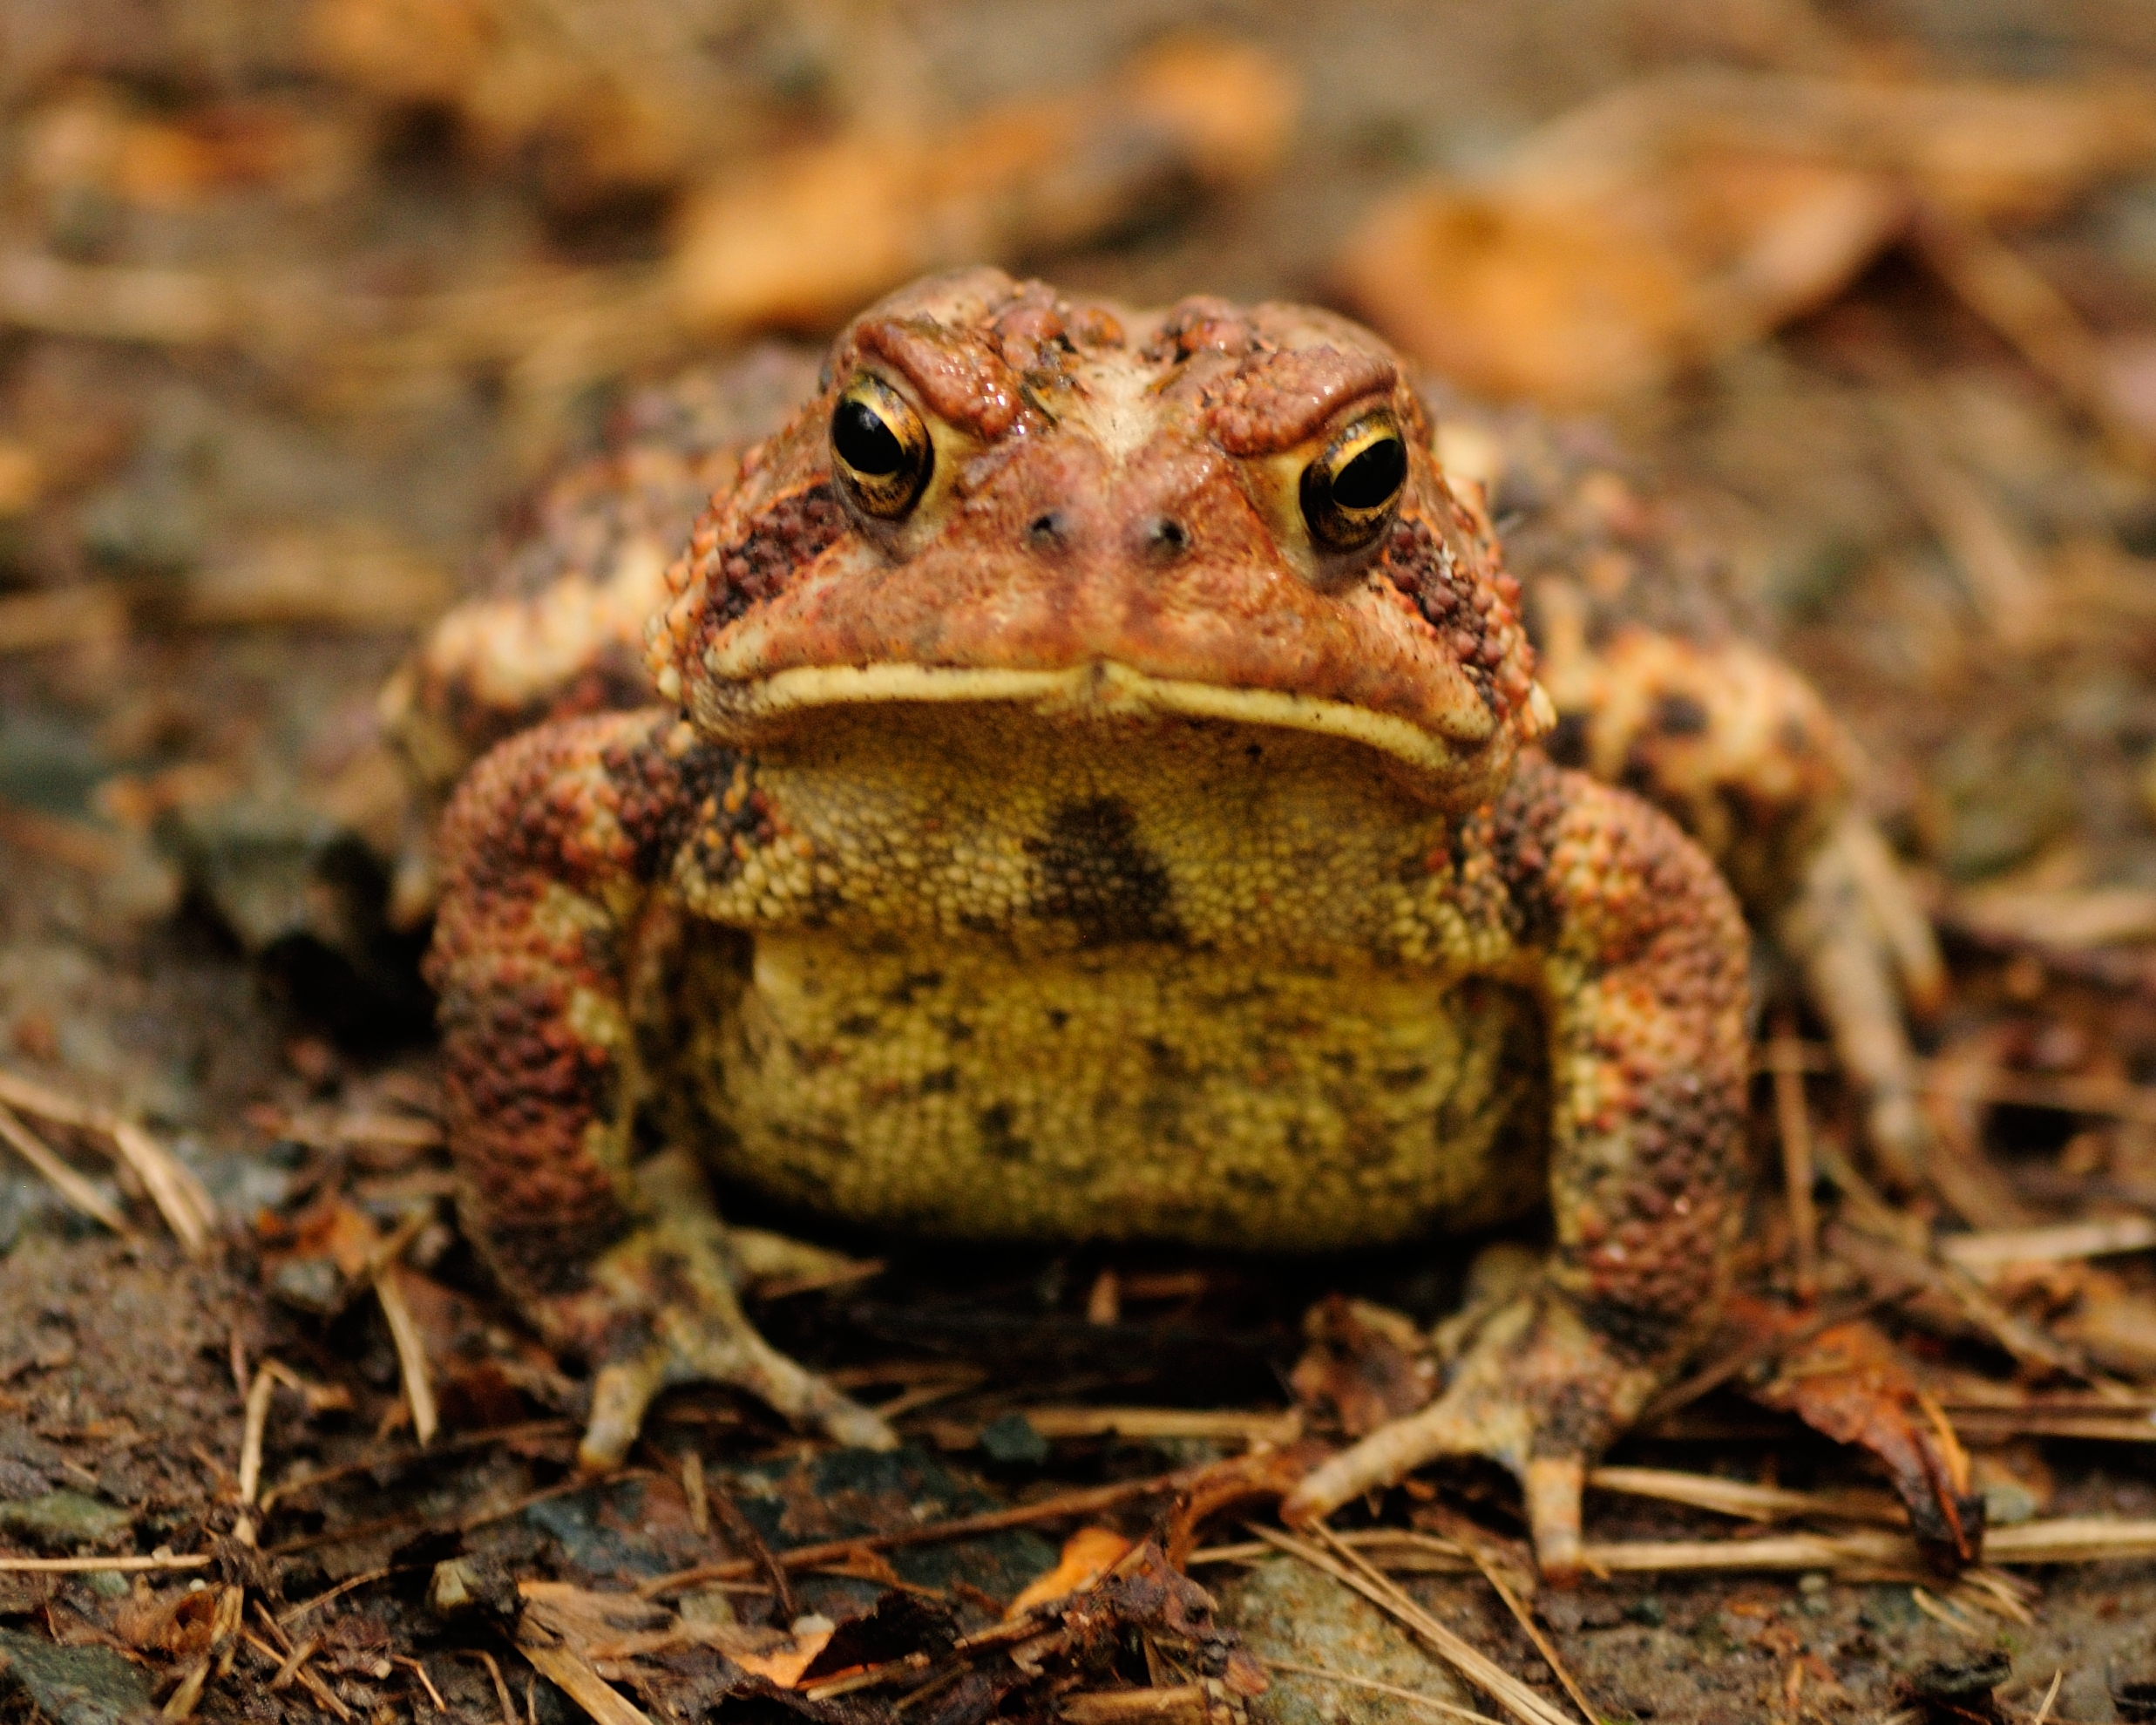 Grumpy toad photo